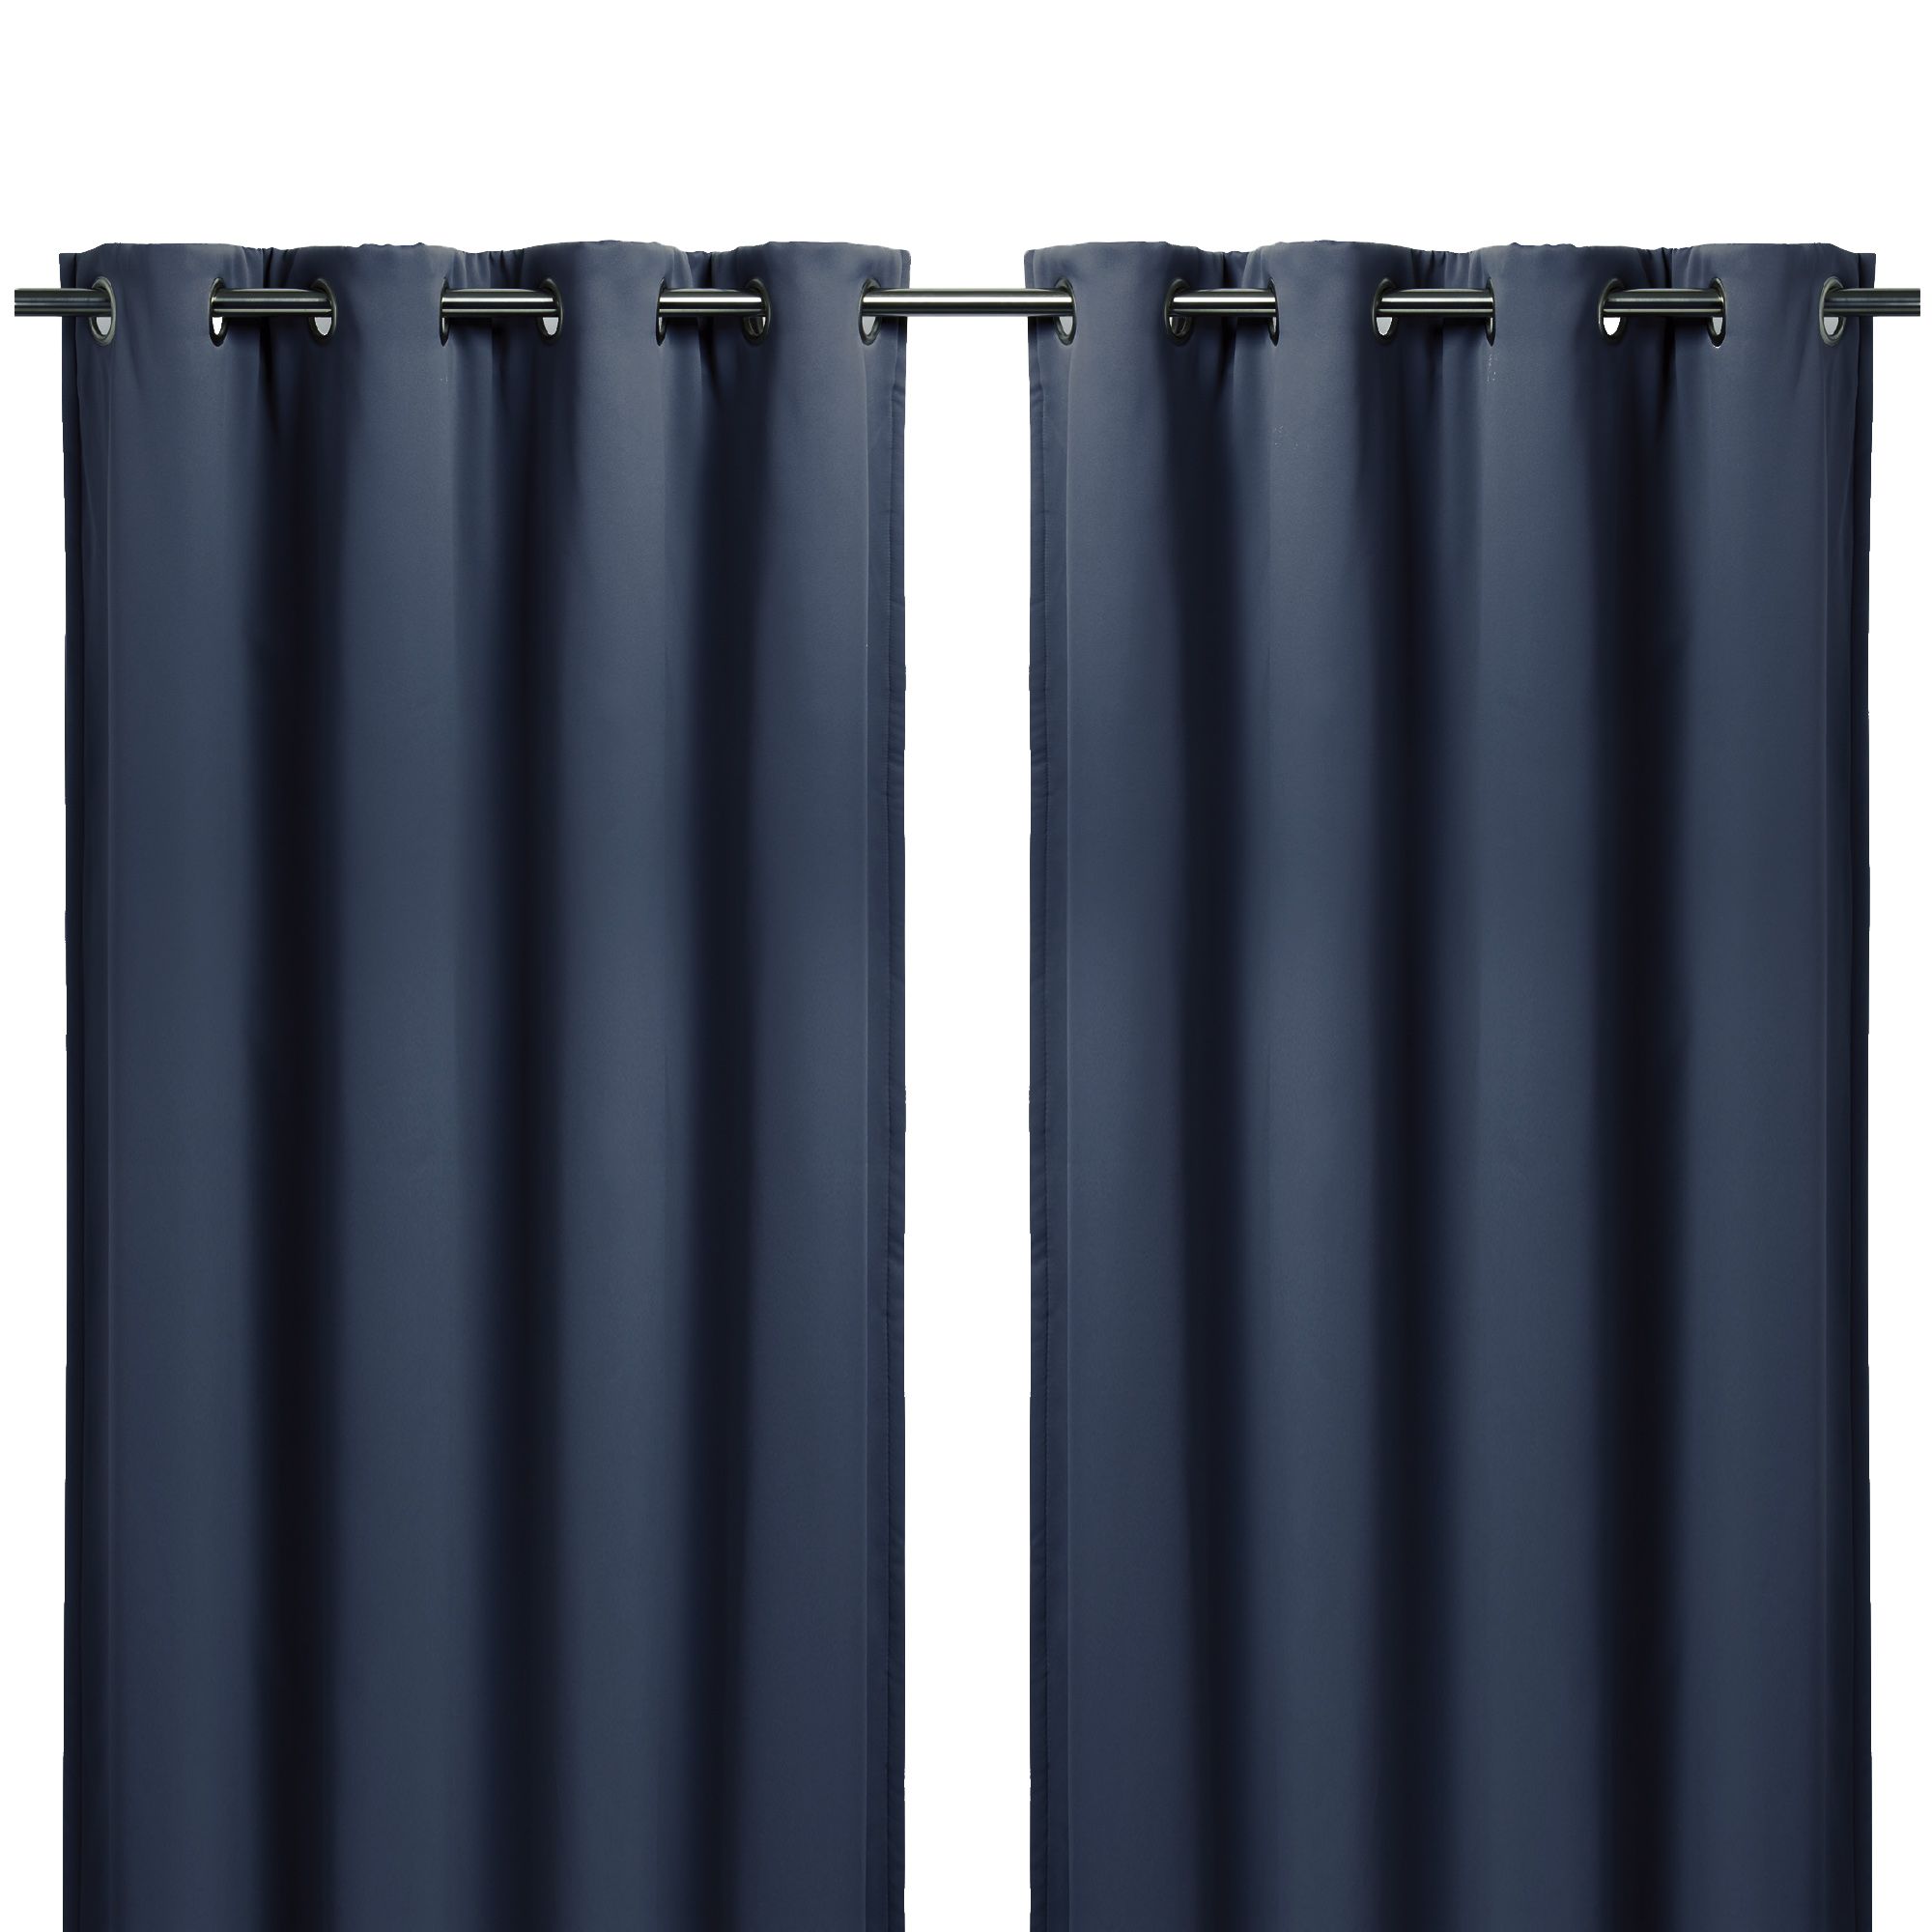 Vestris Navy Plain Blackout & thermal Eyelet Curtain (W)167cm (L)183cm, Pair